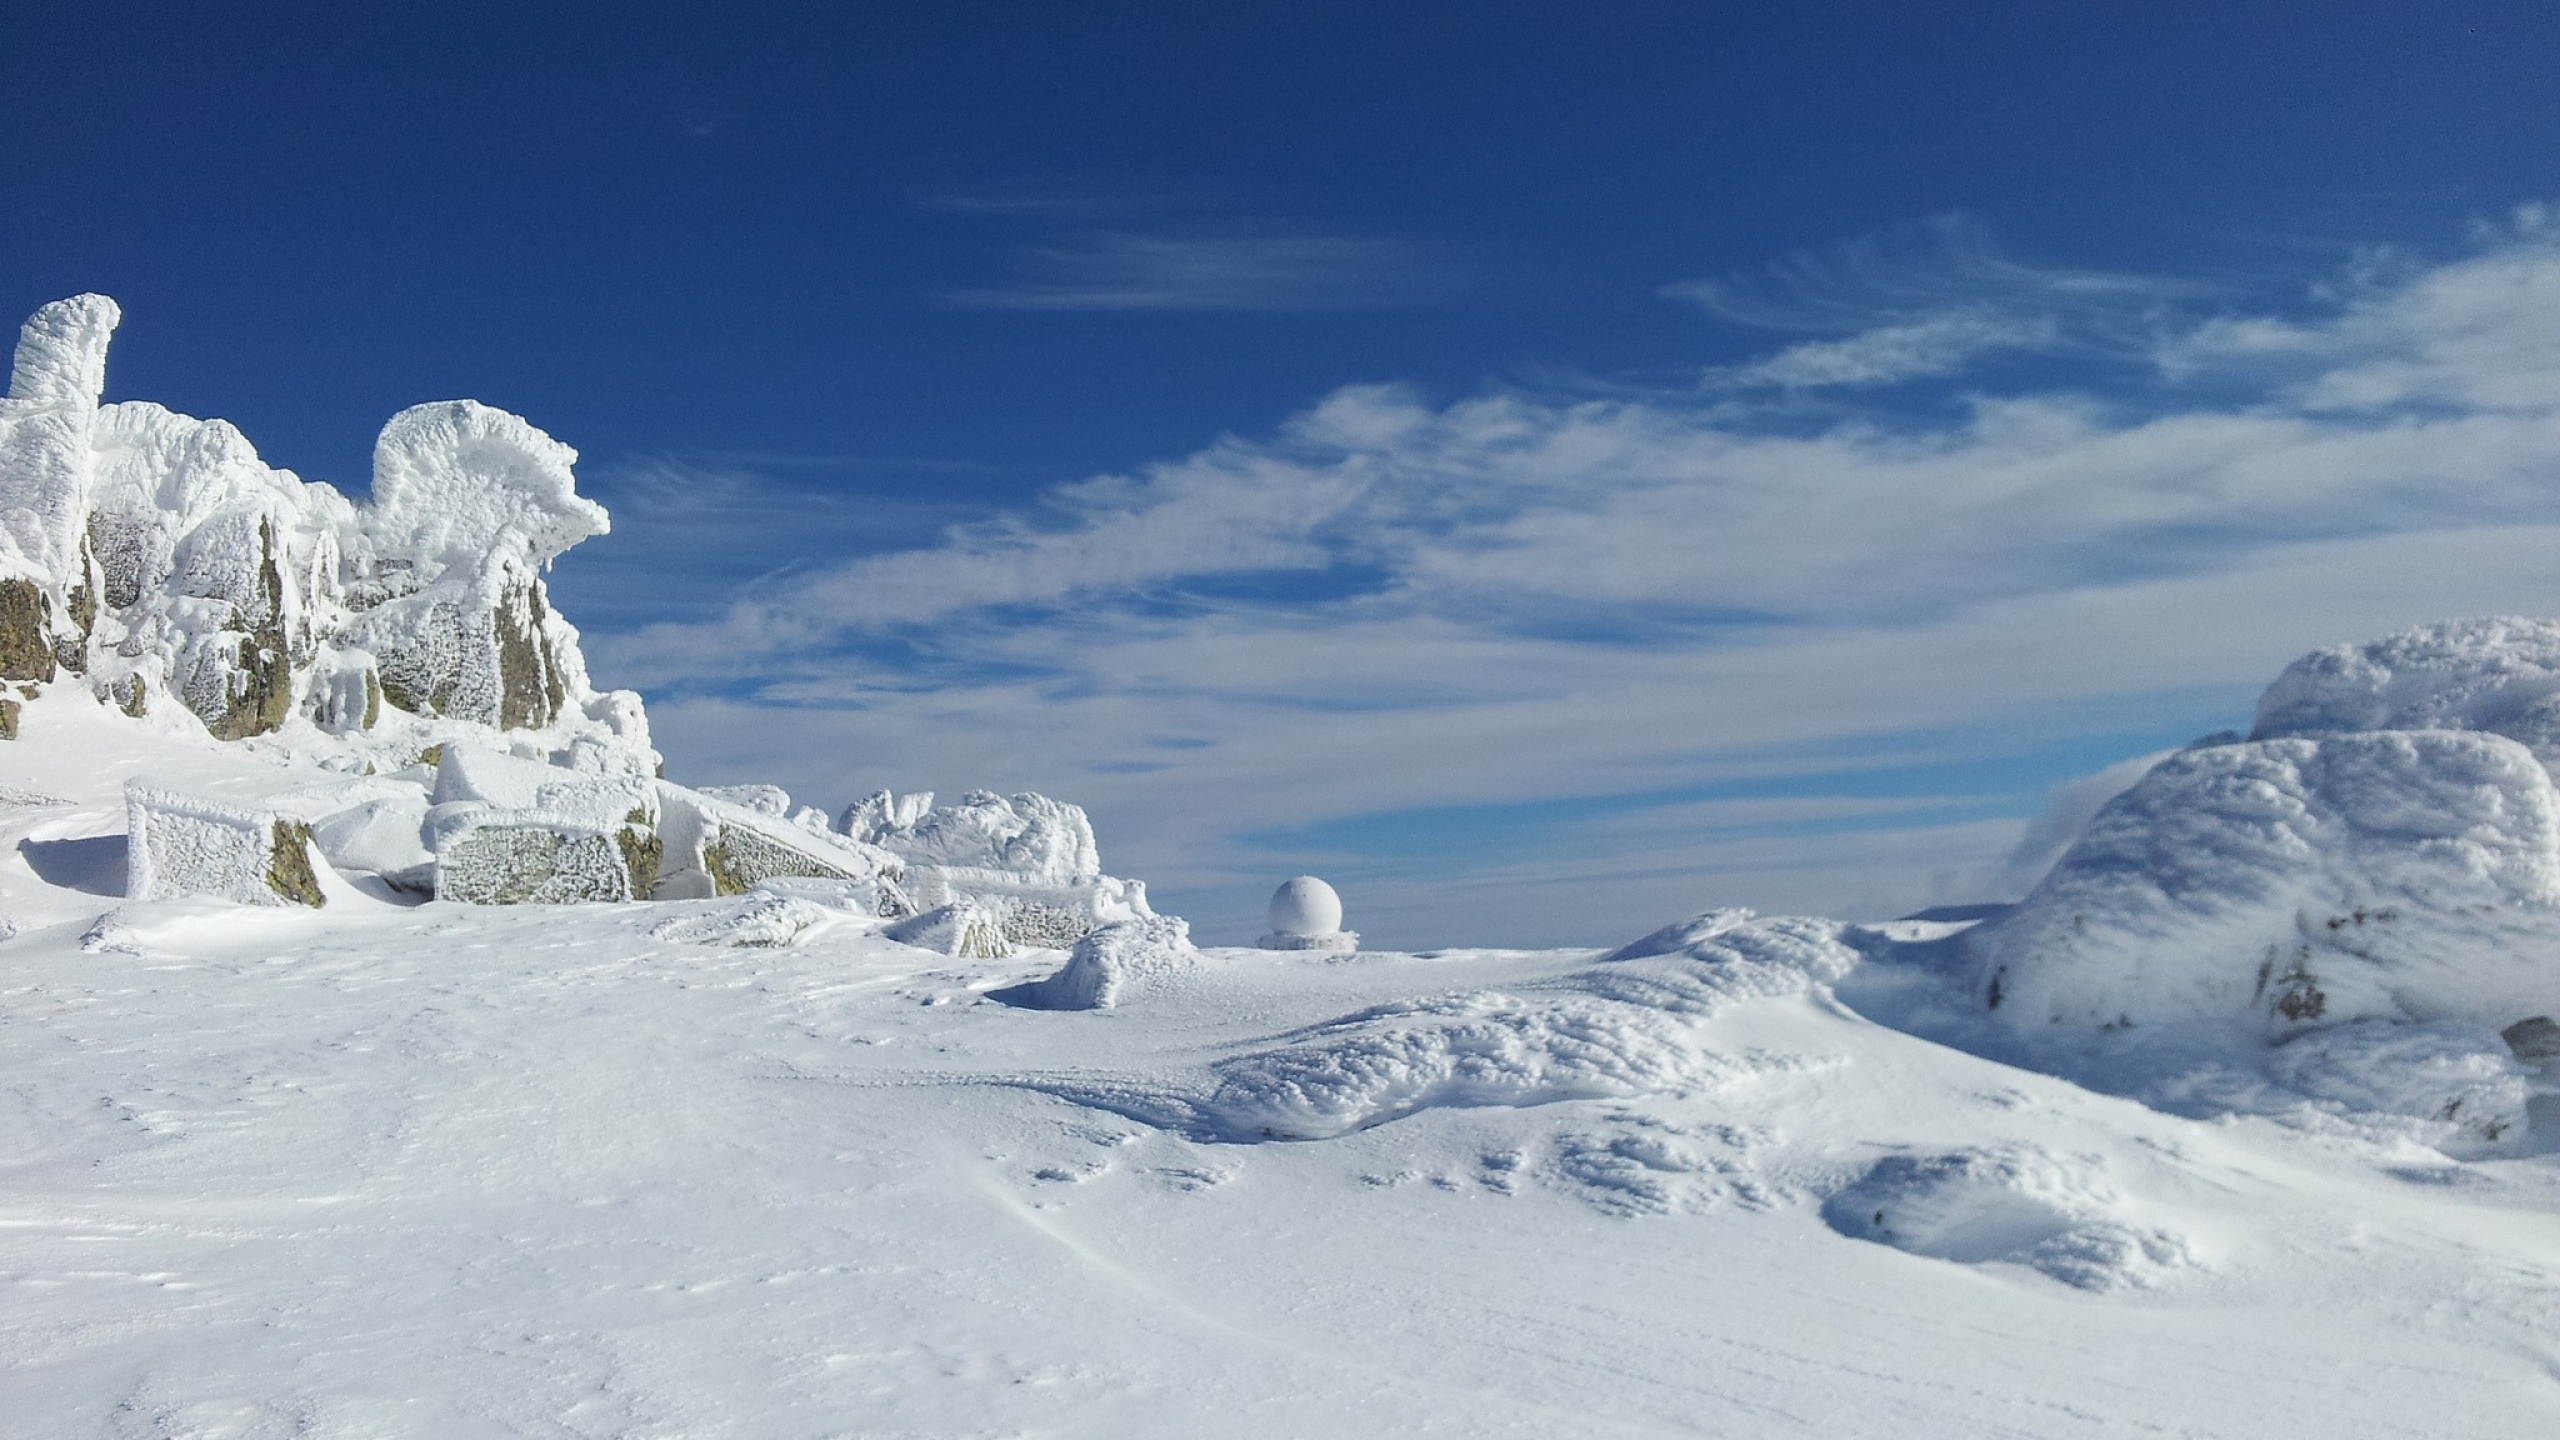 2560x1440 Winter Mountains Snow 1440p Resolution Wallpaper Hd Nature